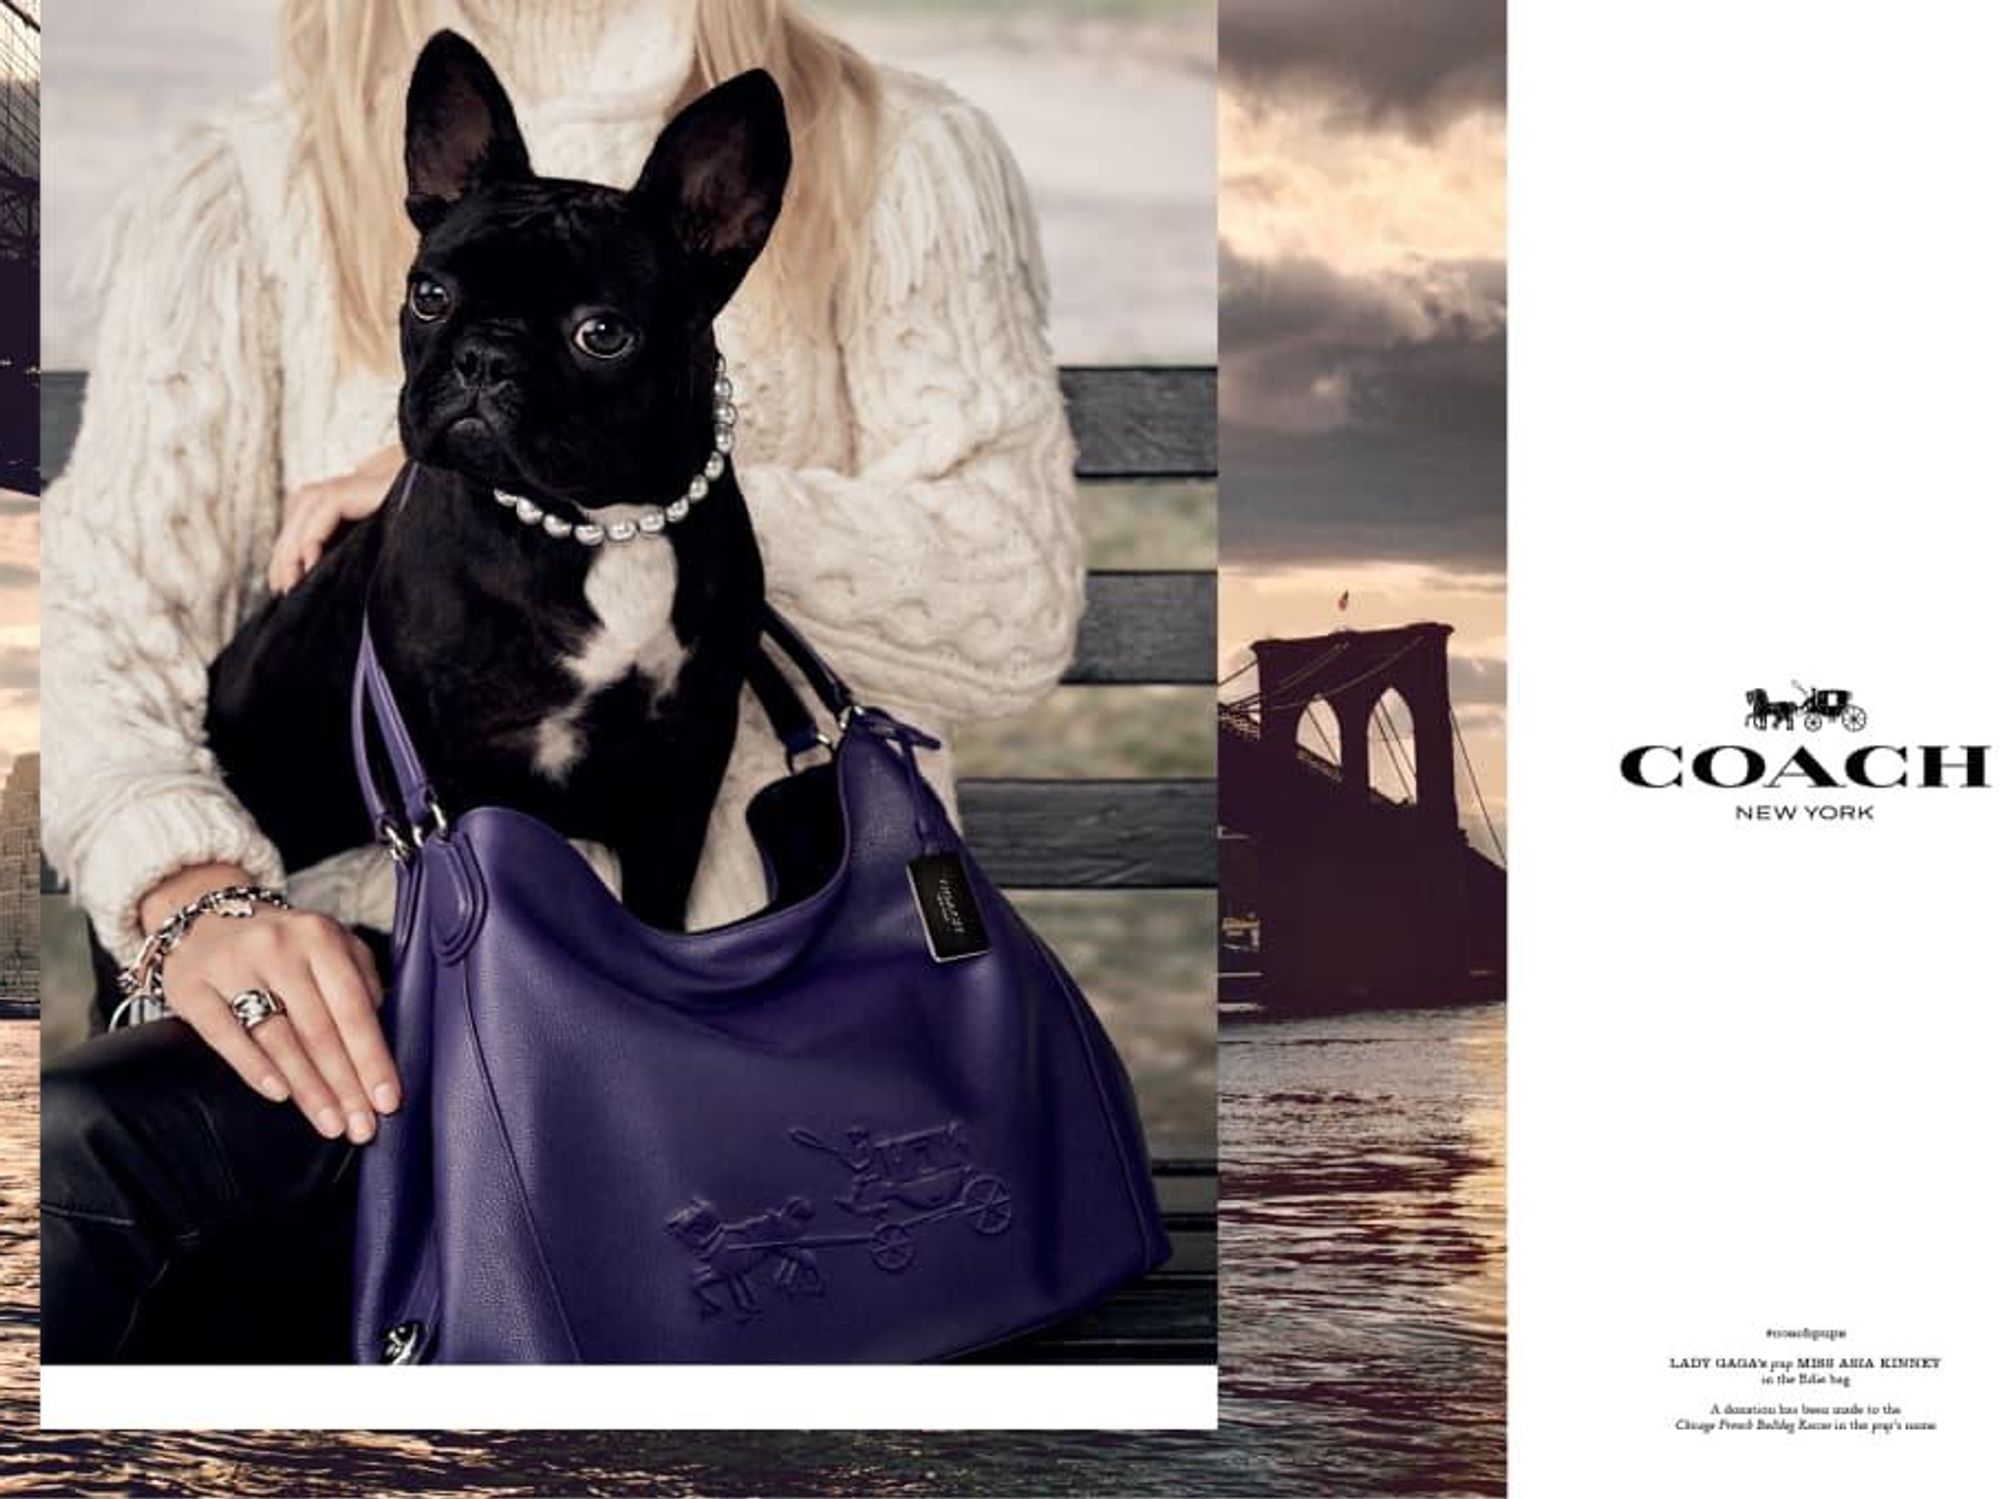 Coach ad campaign featuring Lady Gaga's dog